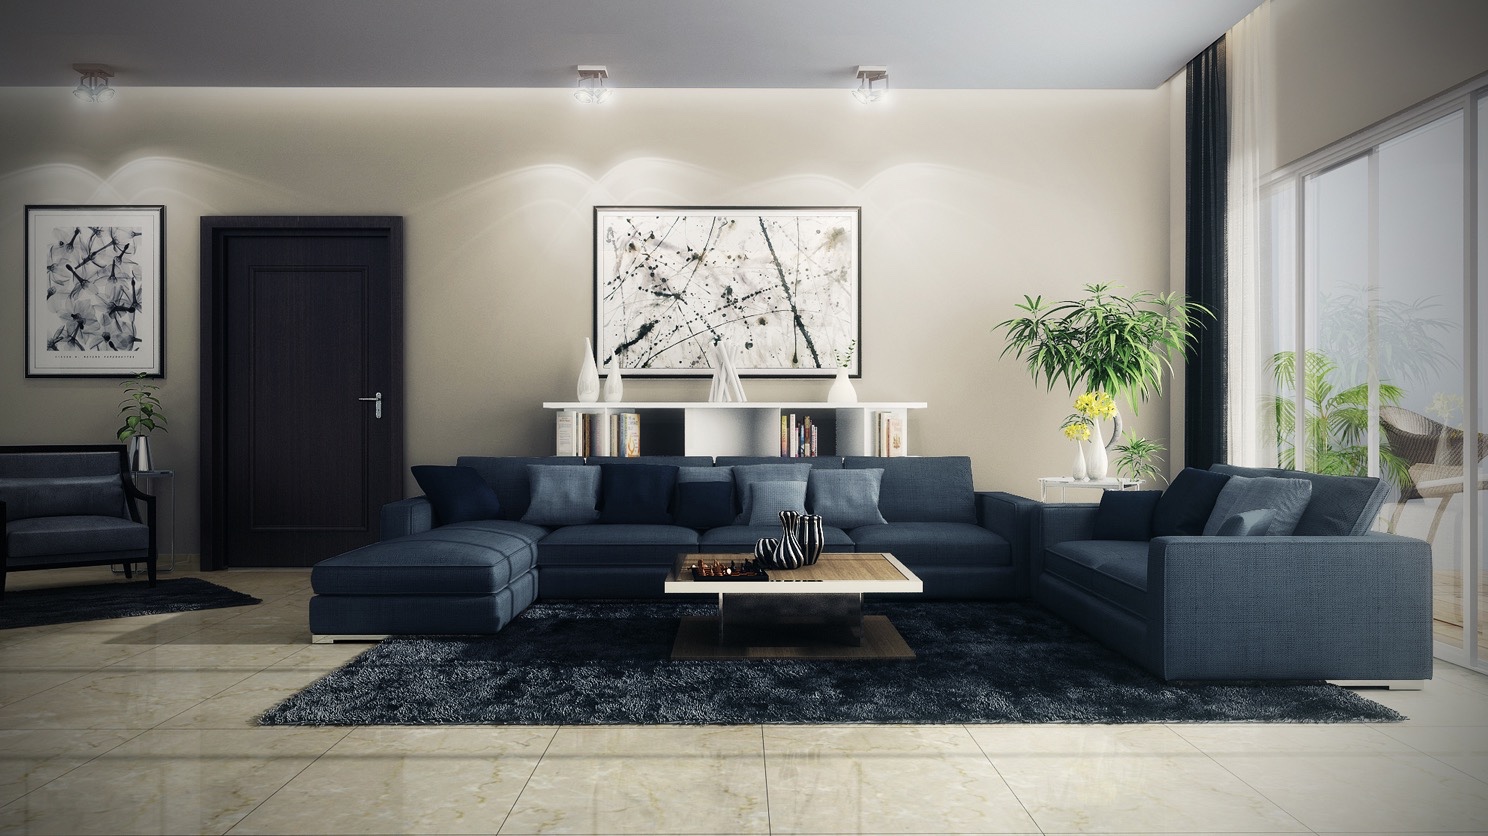 Living room ideas